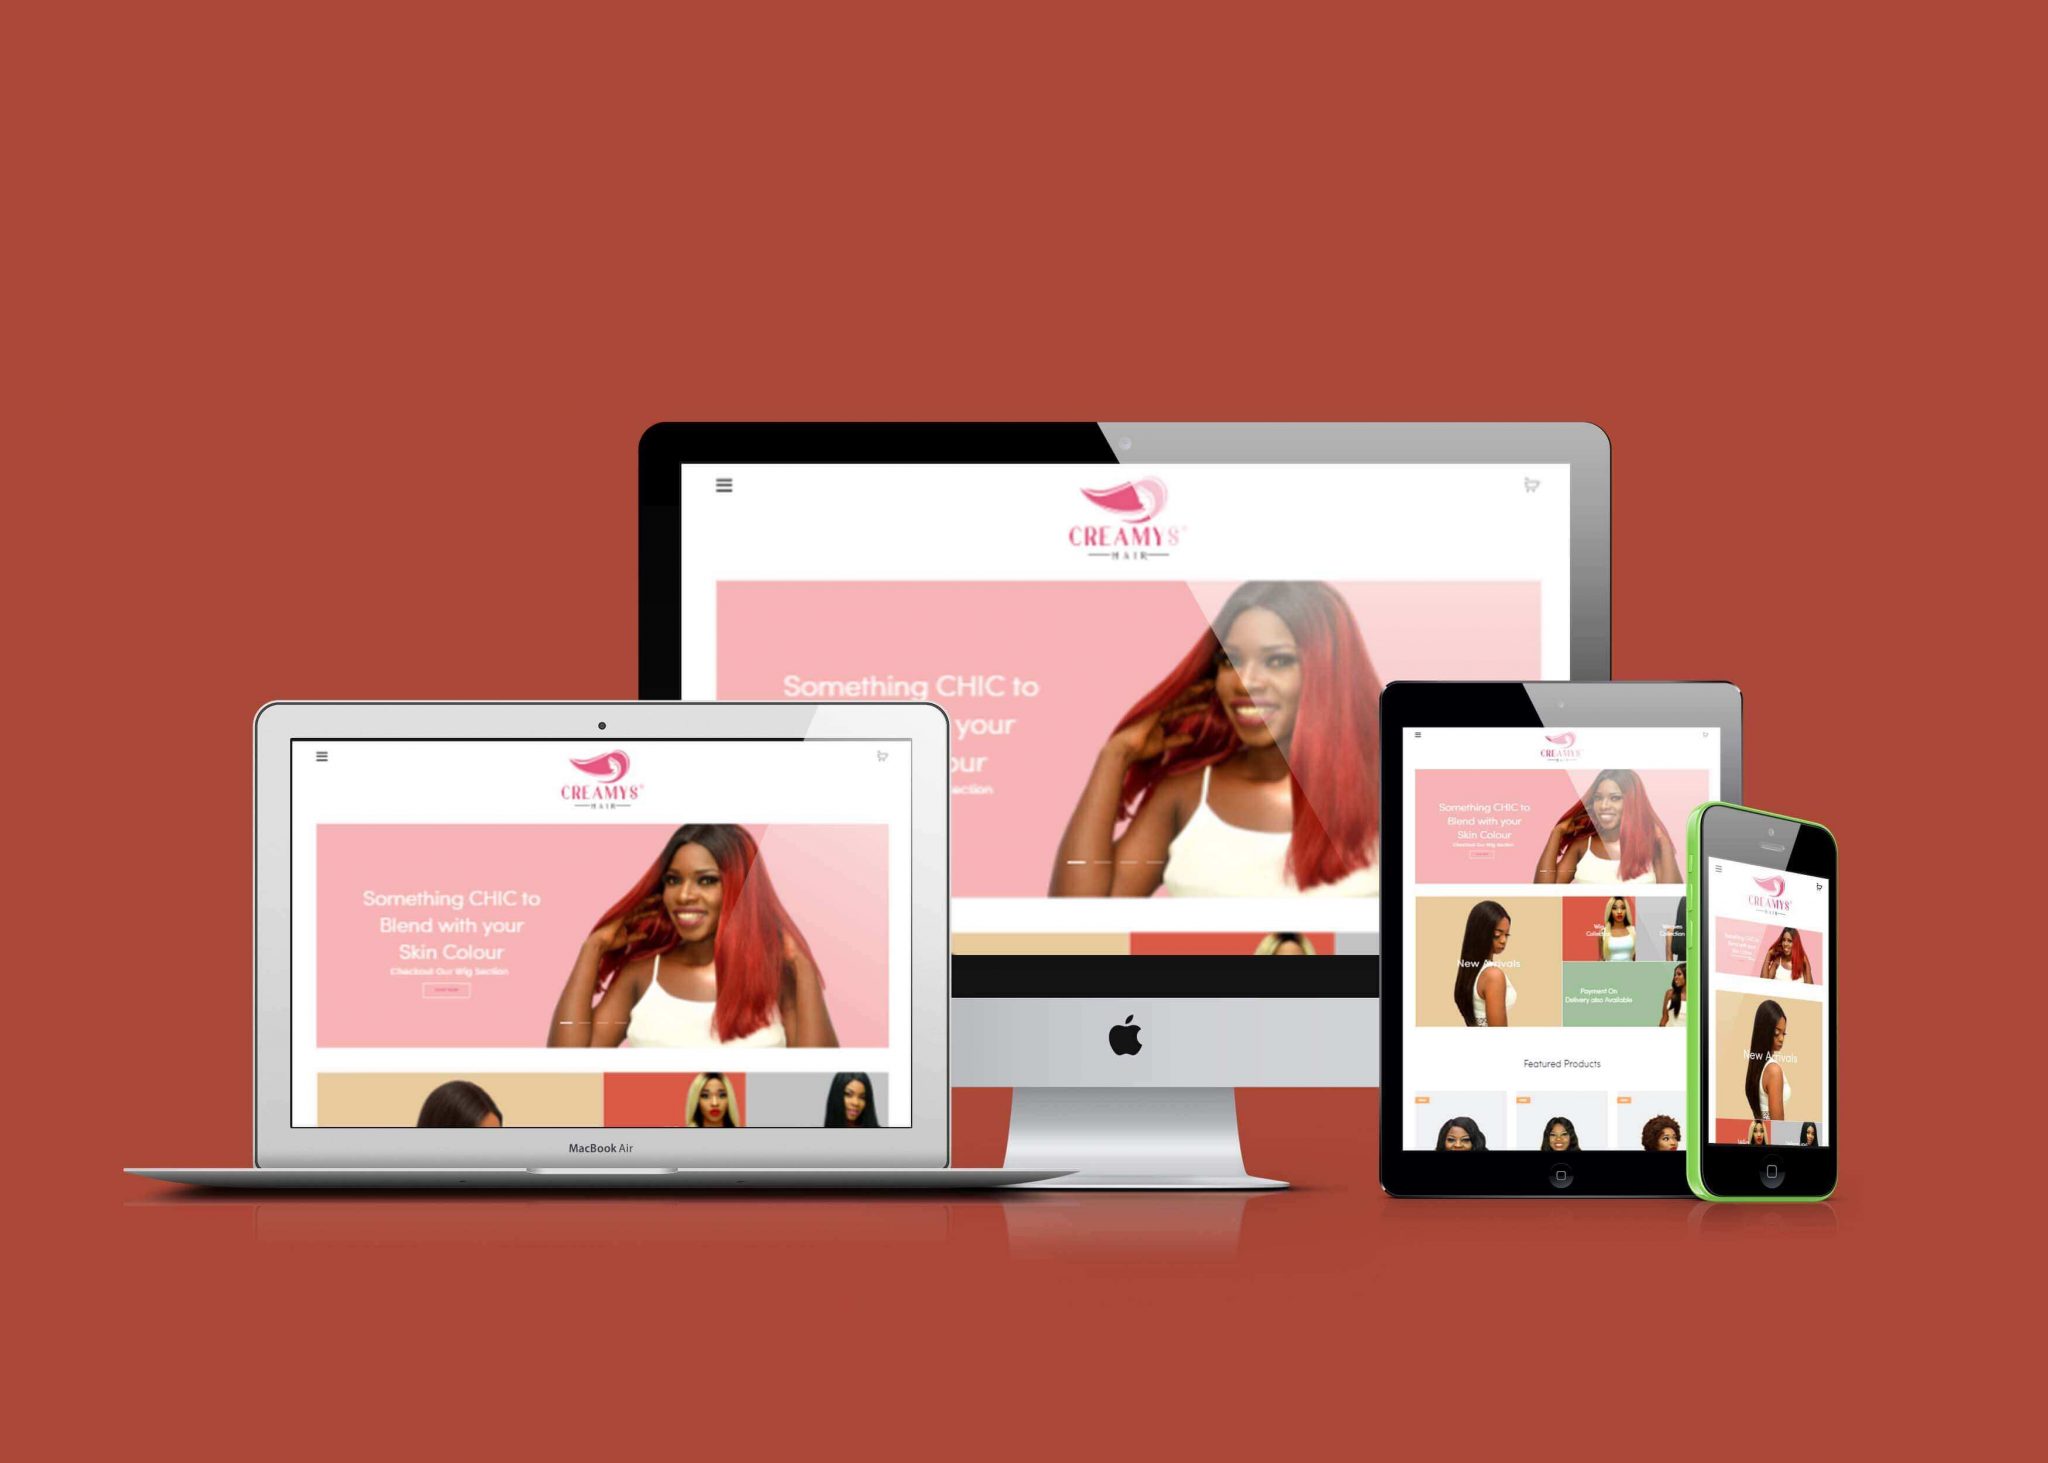 Creamy's Hair Website Design and Development